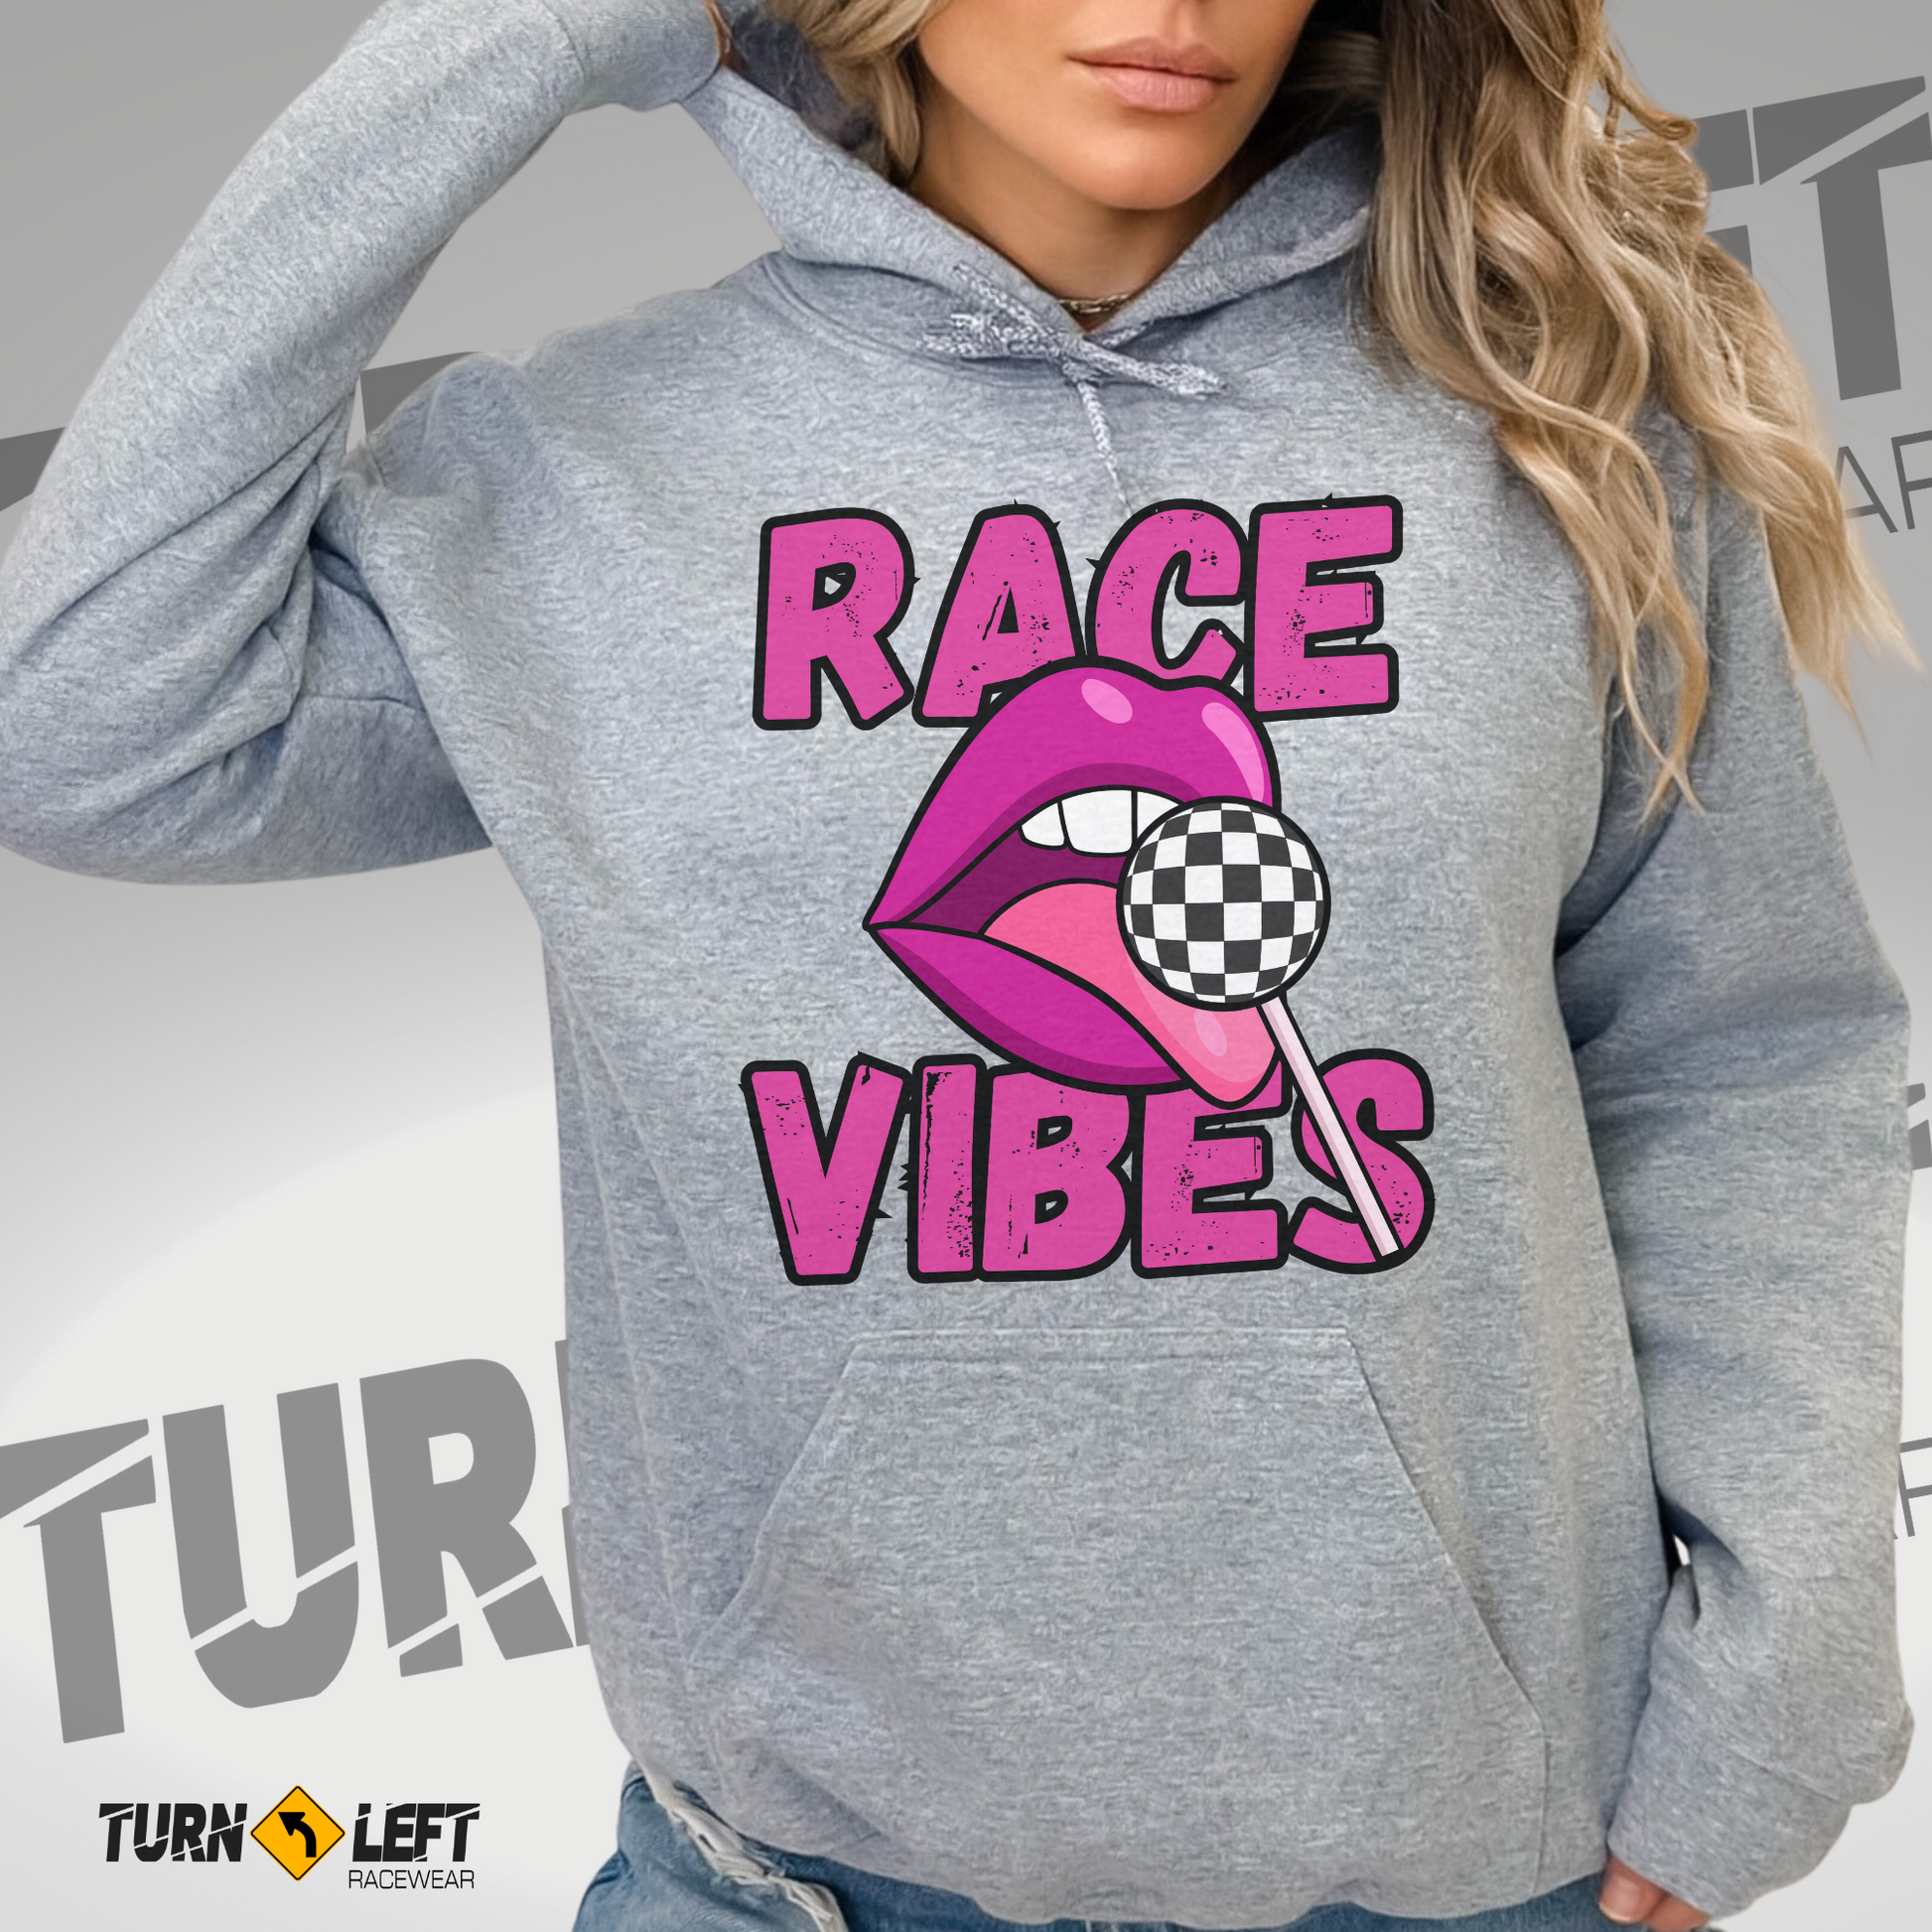 Women's racing sweatshirts, Race Vibes Racing quote Hoodie. Women's graphic racing shirts. Dirt track racing apparel, Nascar racing hoodies, Checker flag racing hoodies for women. 